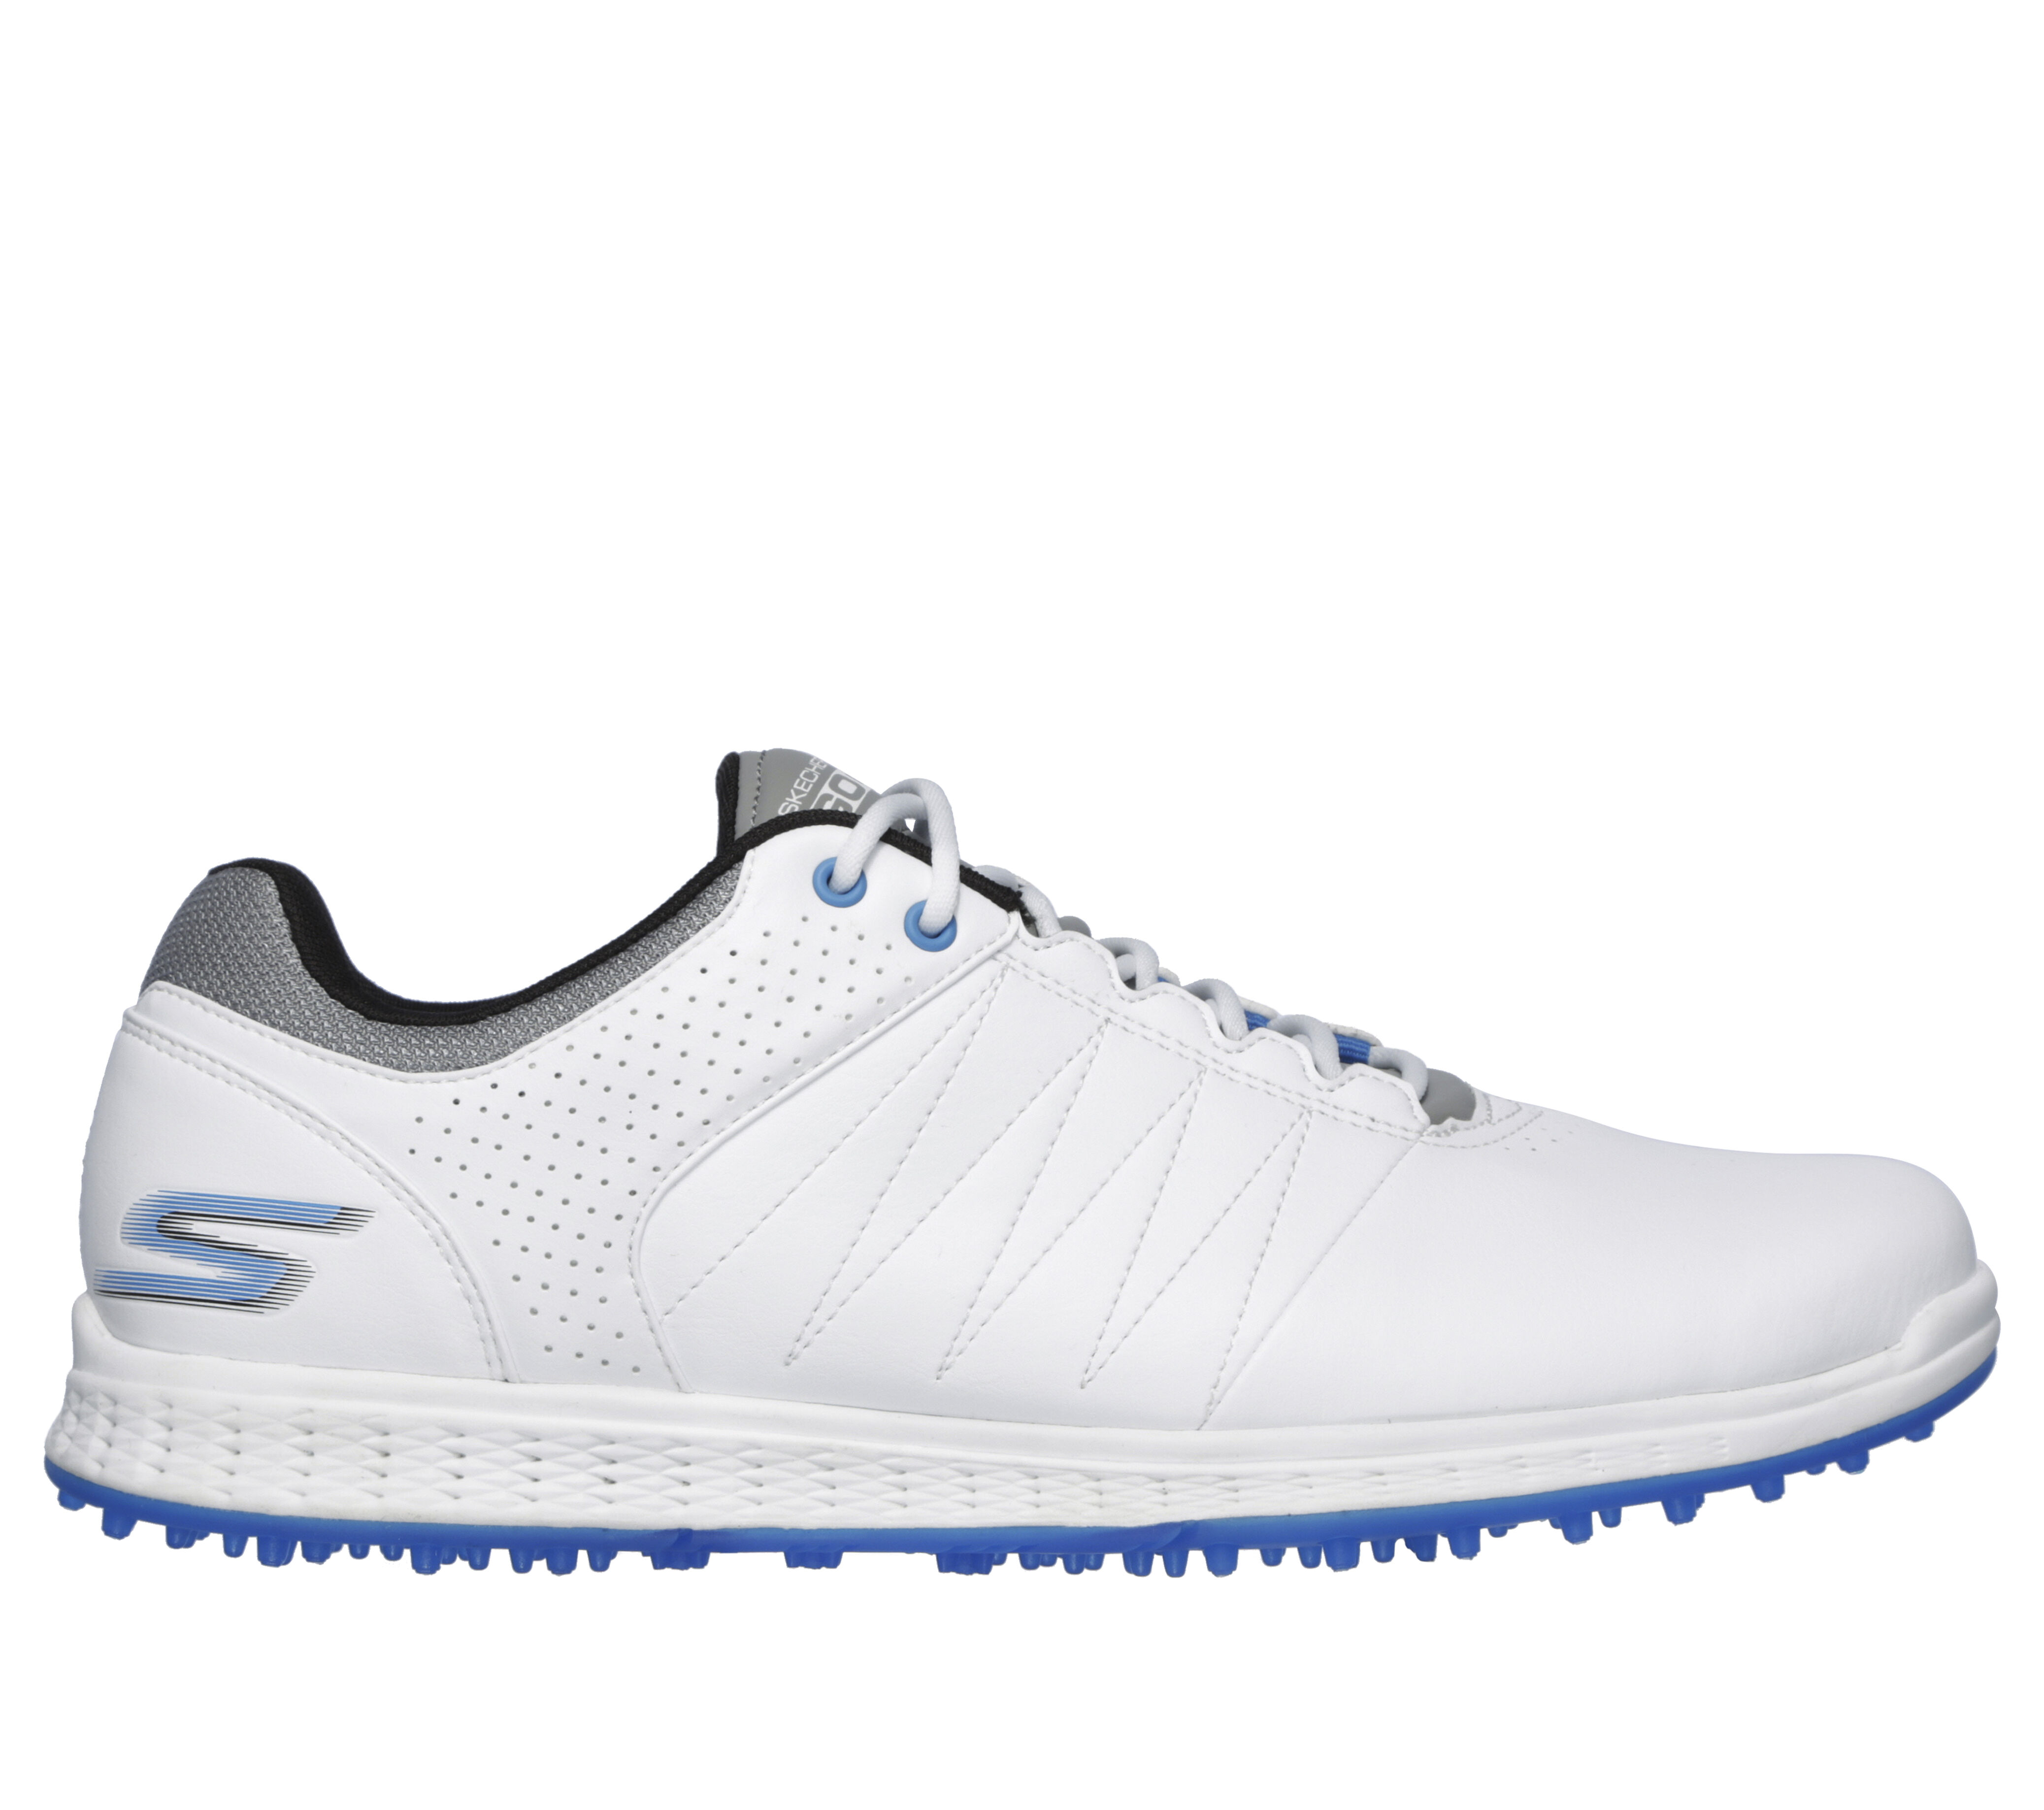 skechers golf shoes 2016